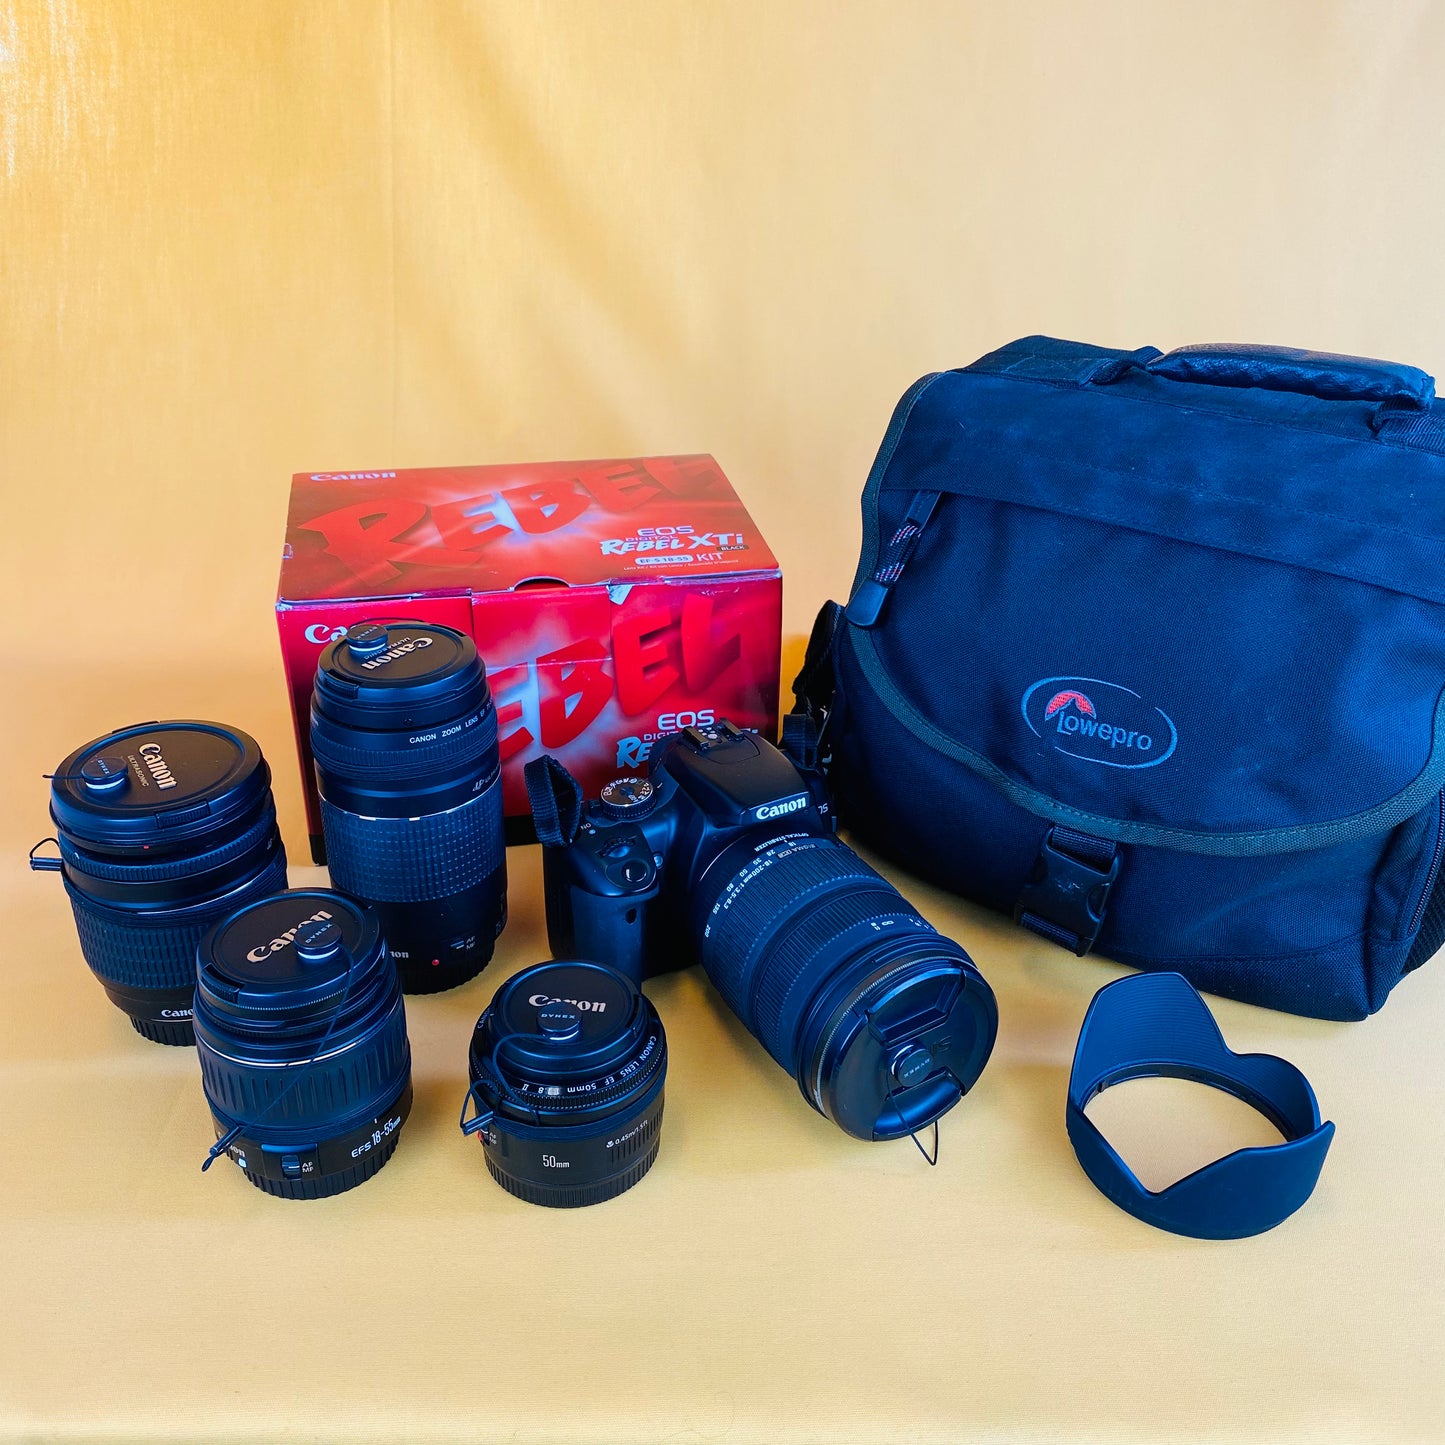 canon rebel digital camera kit with 5 lenses